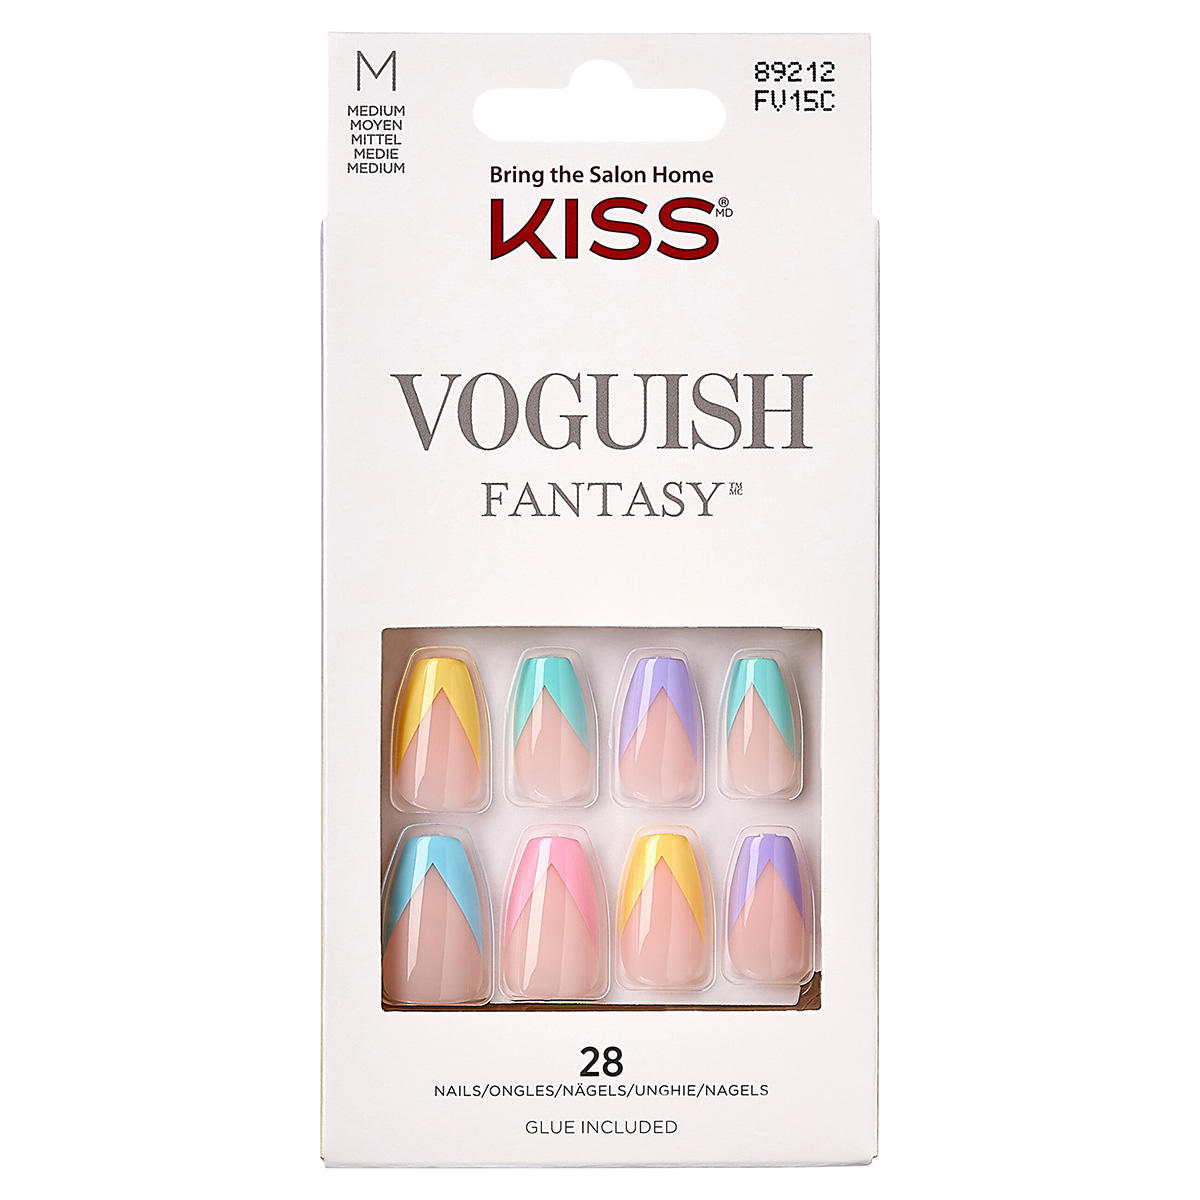 KISS Voguish Fantasy Nails - Candies  - 1